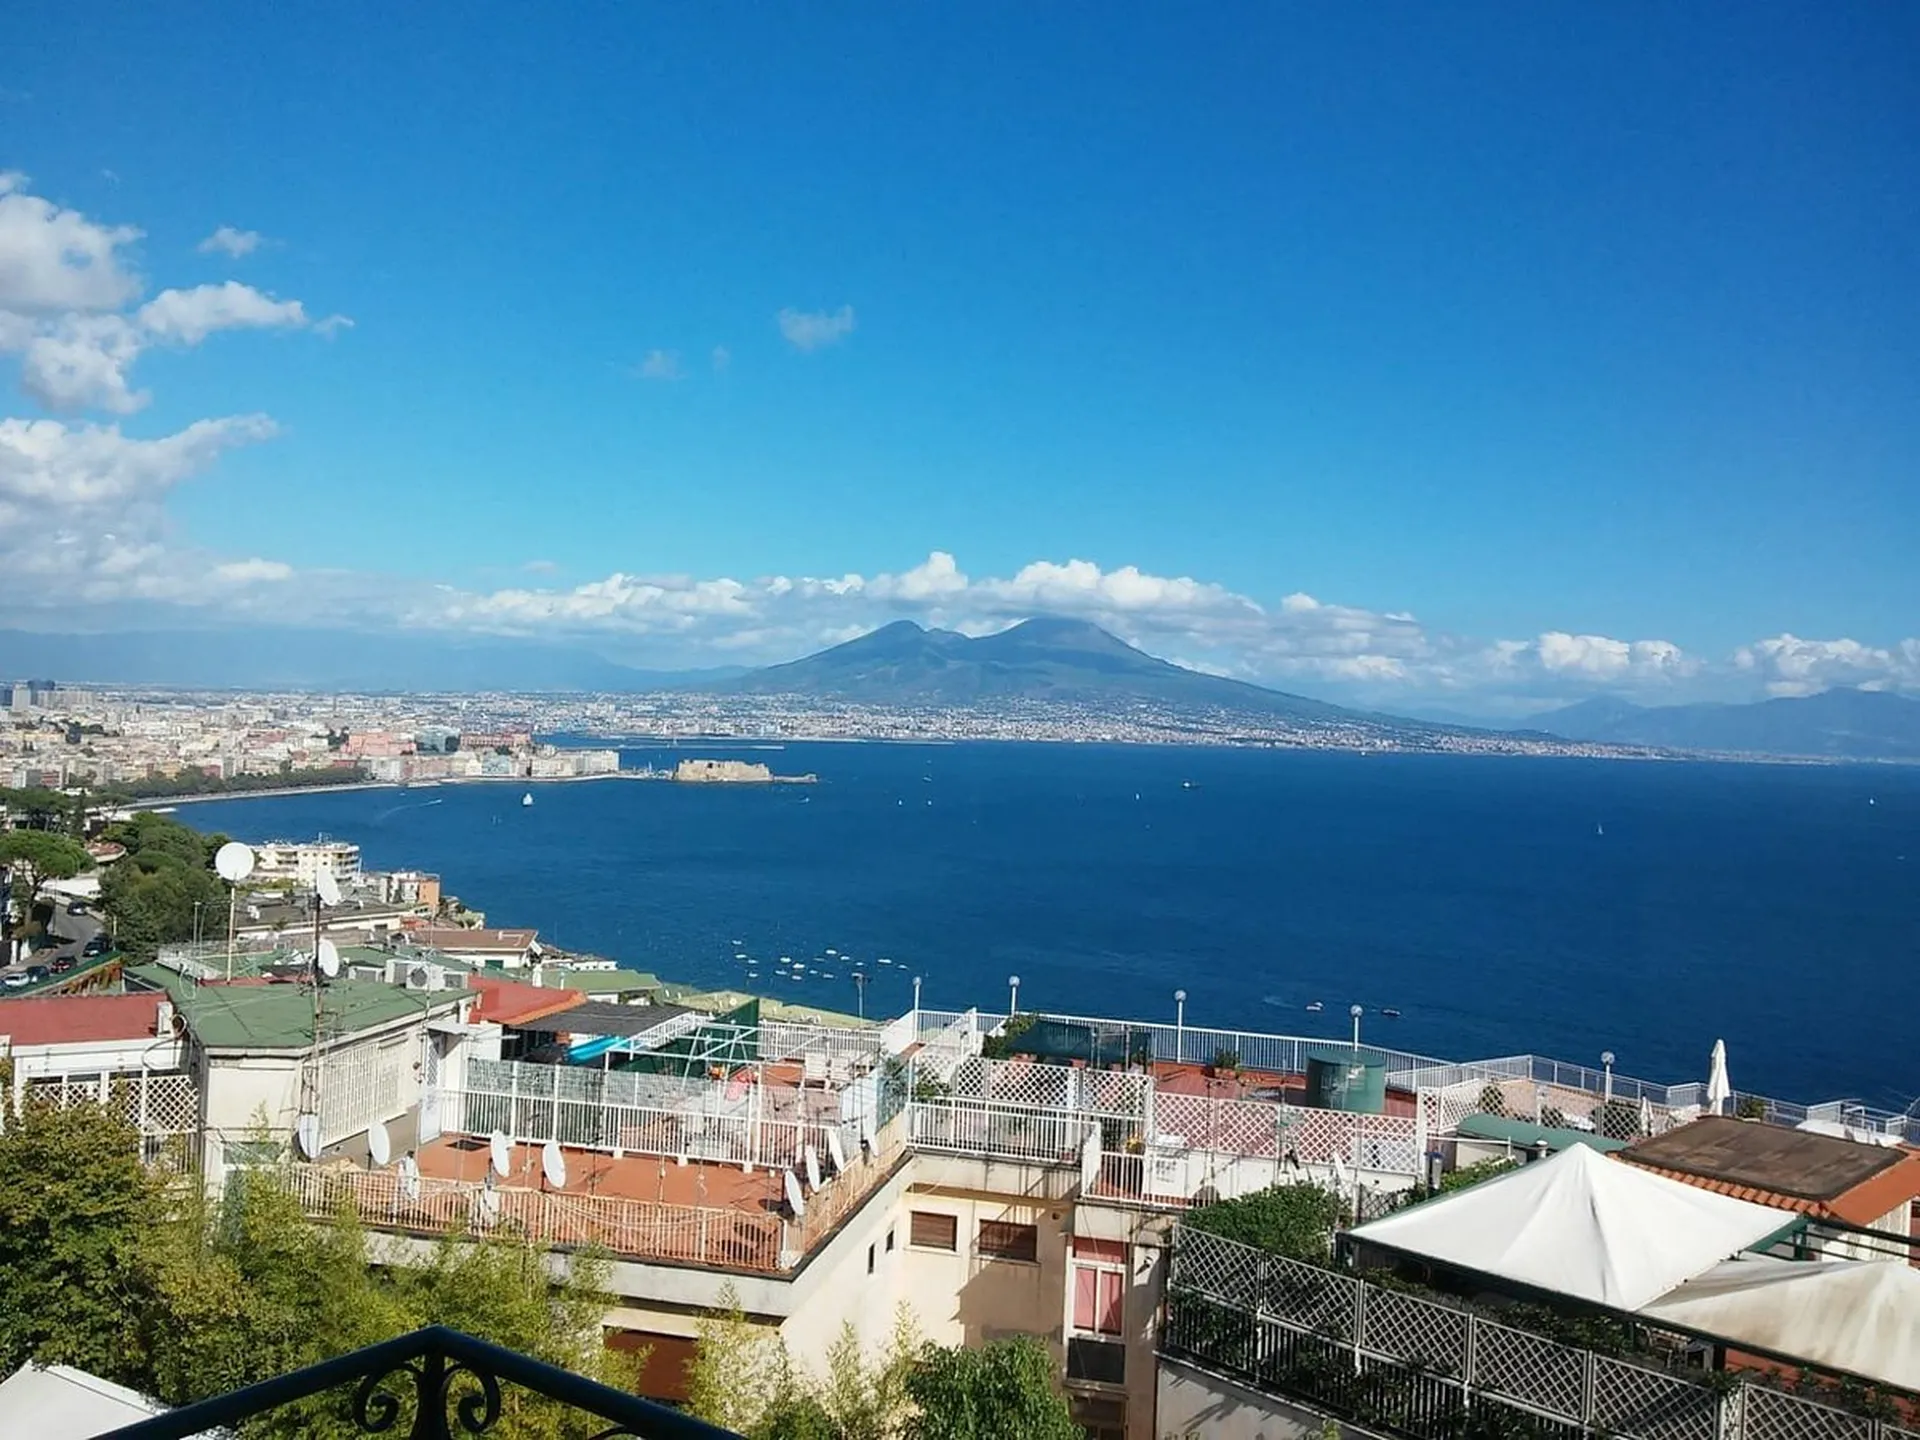 Explore Naples